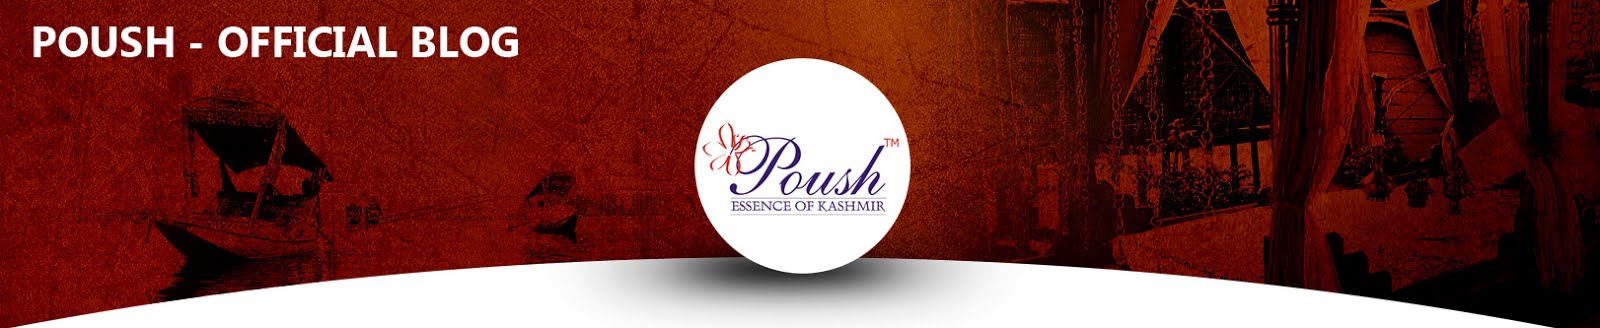 Poush - Essence of Kashmir (Blog)